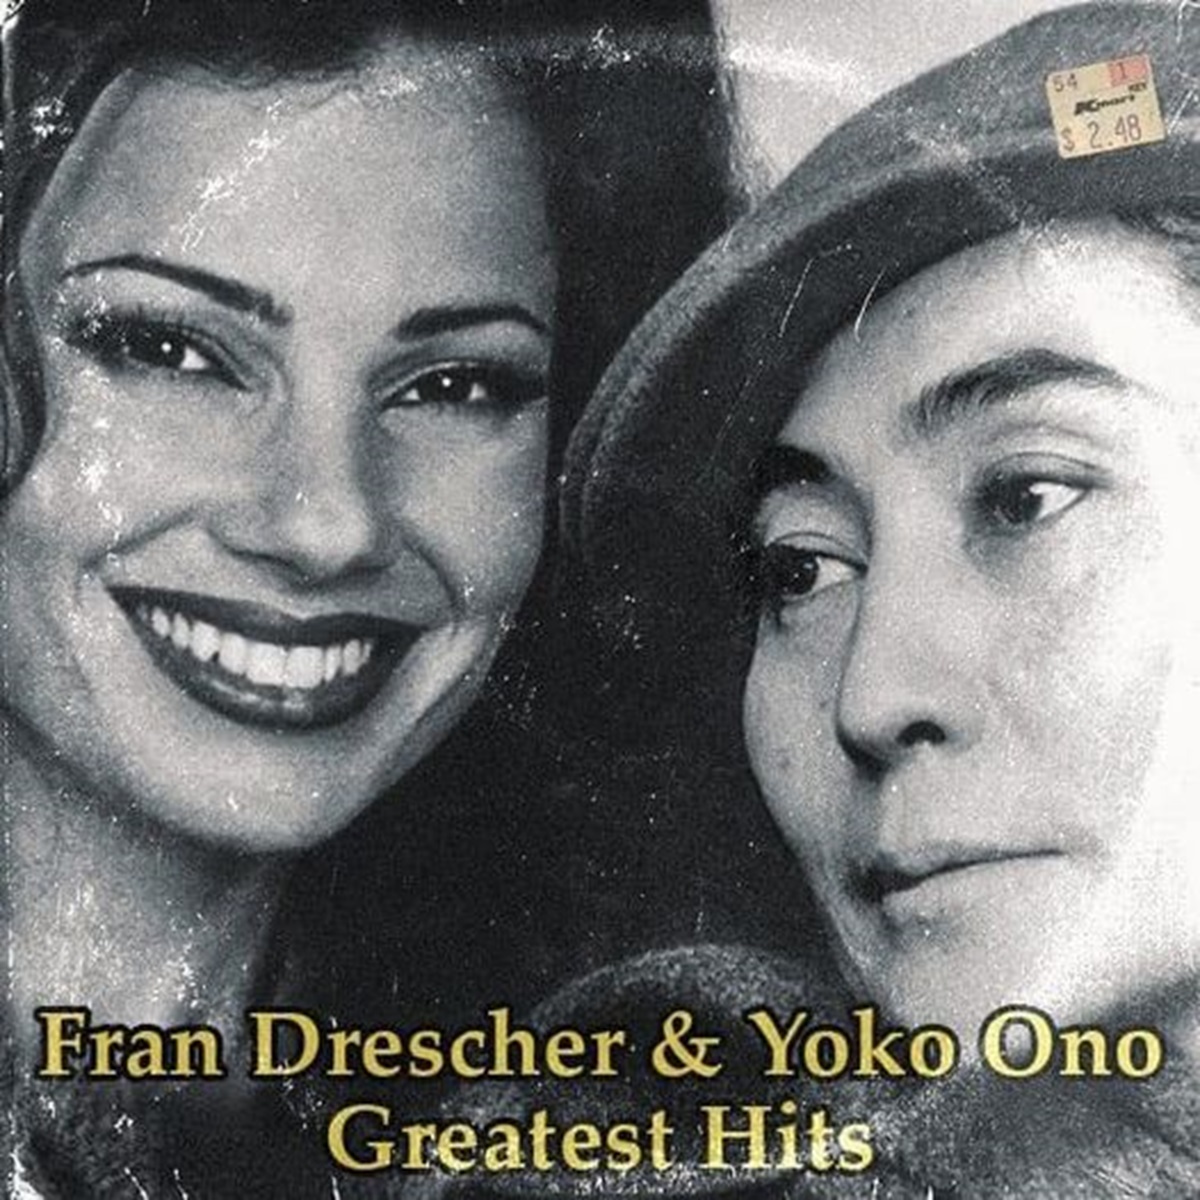 john lennon killer autograph - 54 $2.48 Fran Drescher & Yoko Ono Greatest Hits